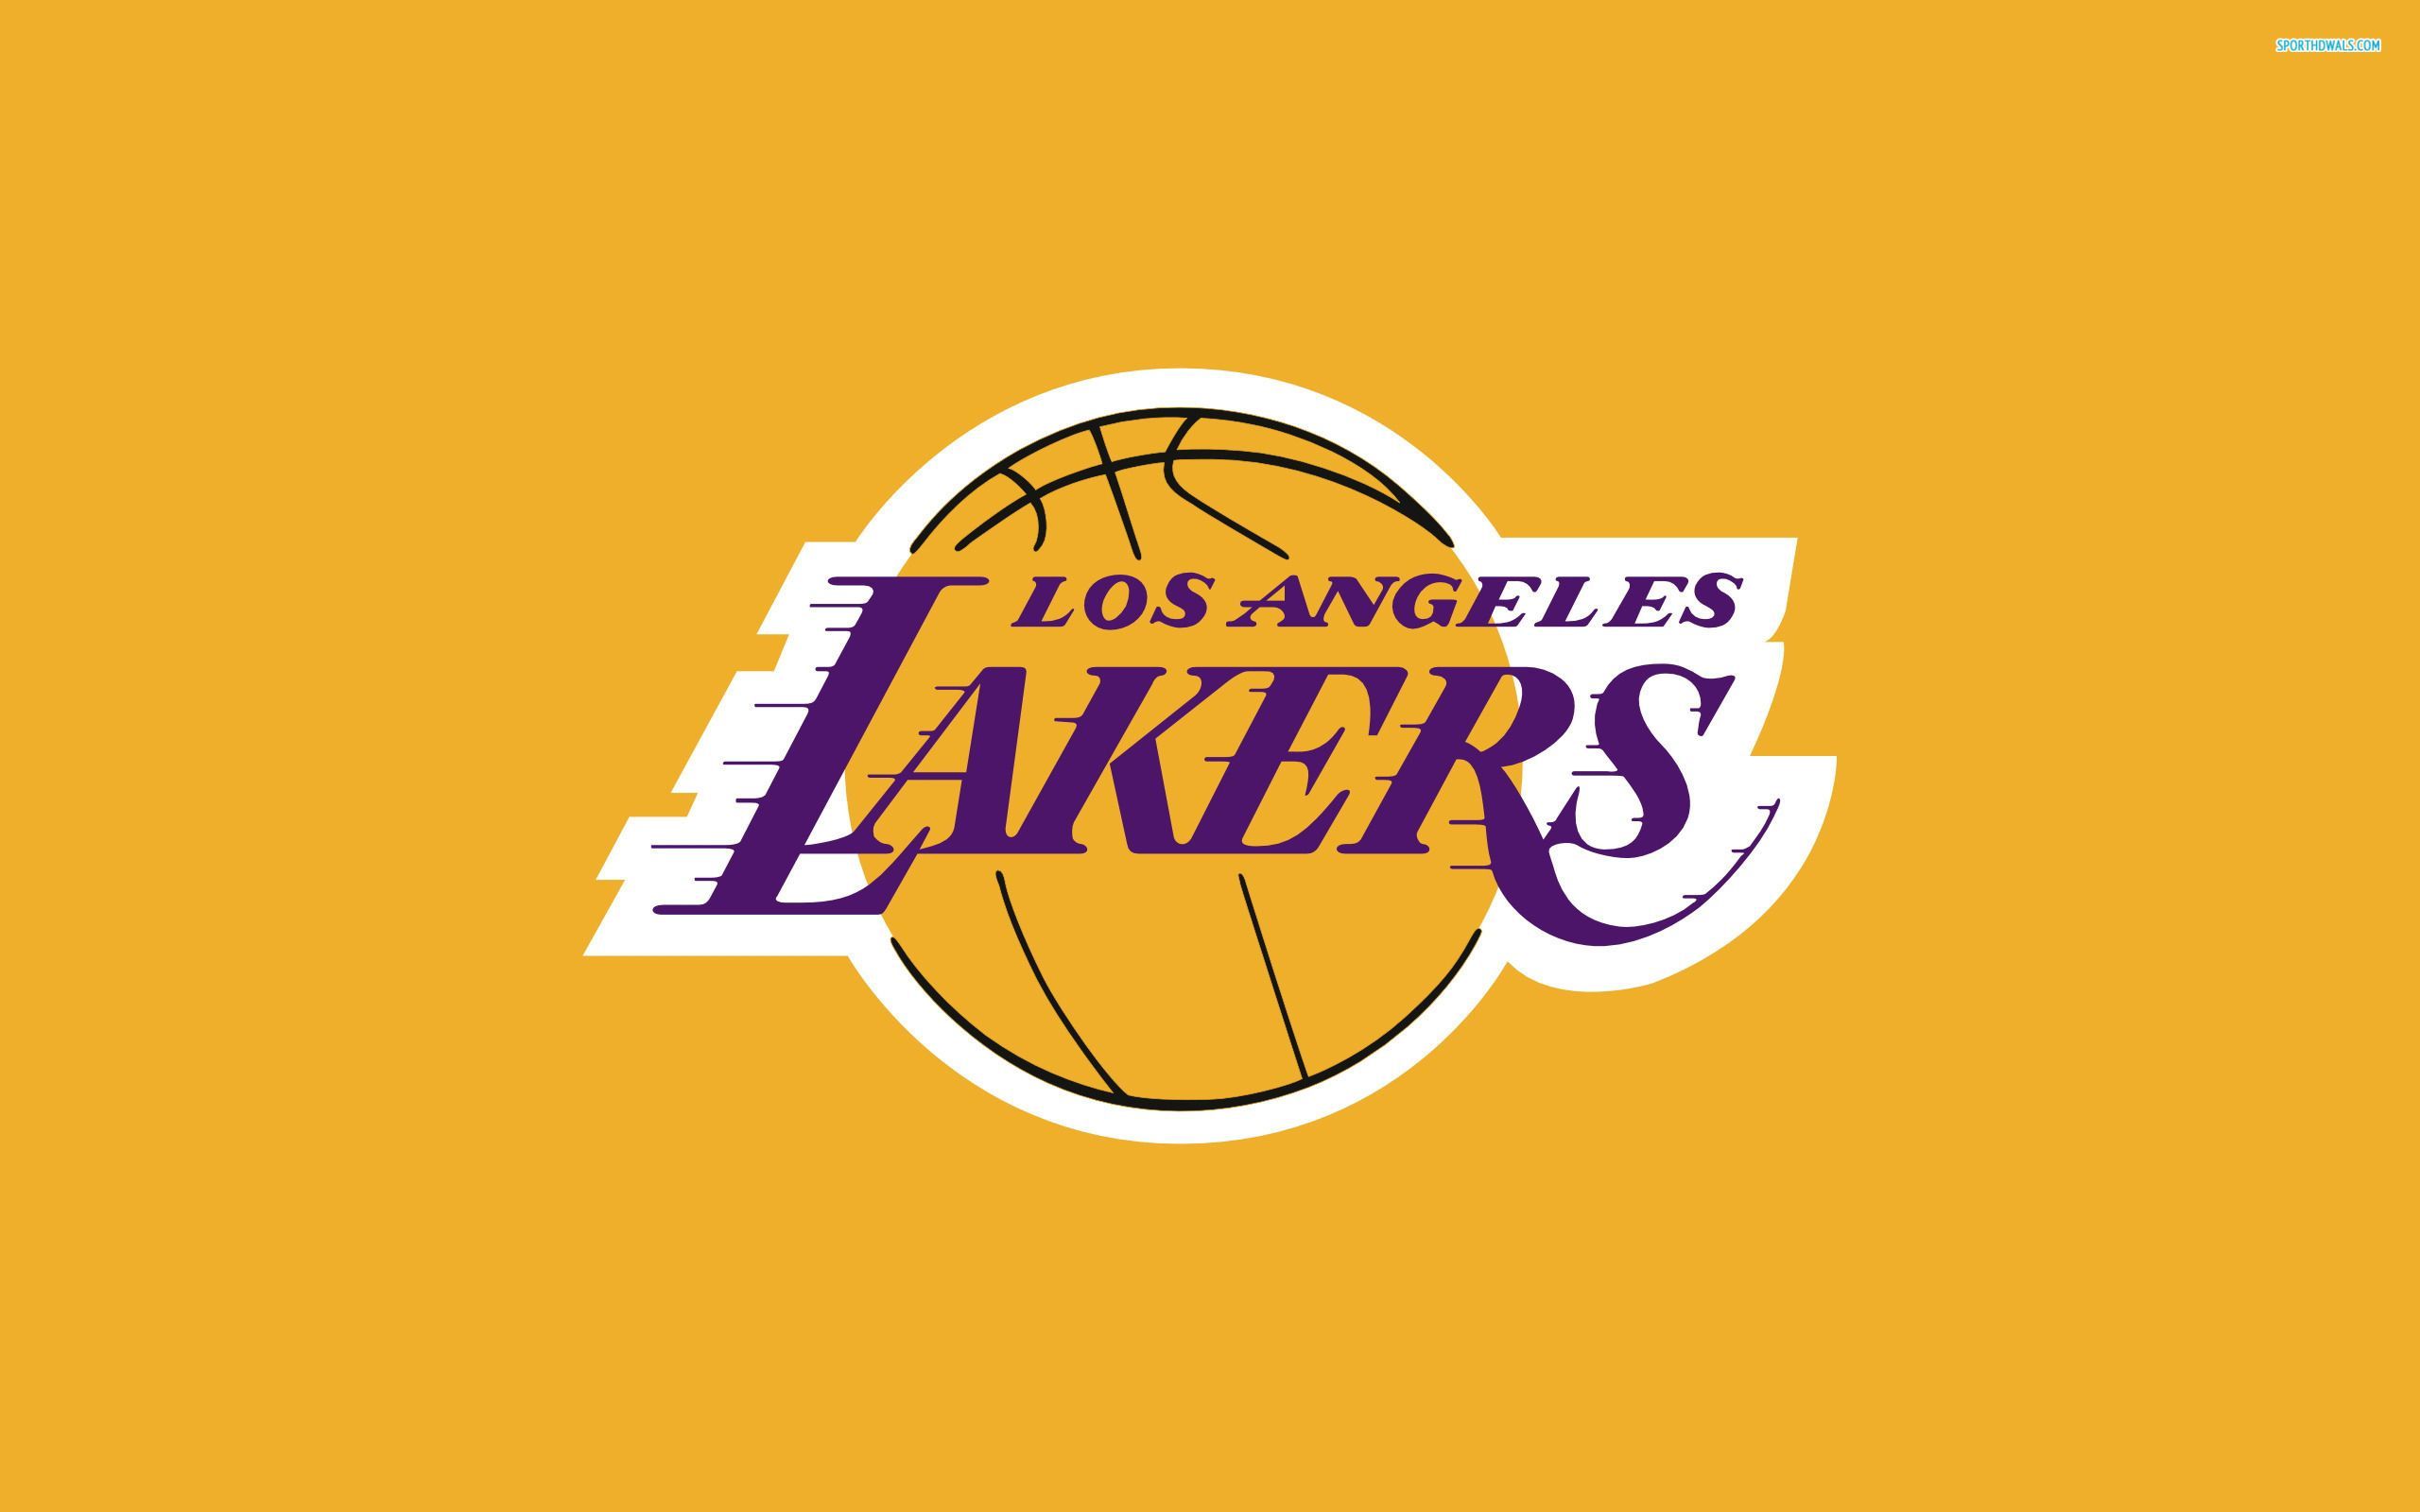 Lakers 24 Logo Wallpapers